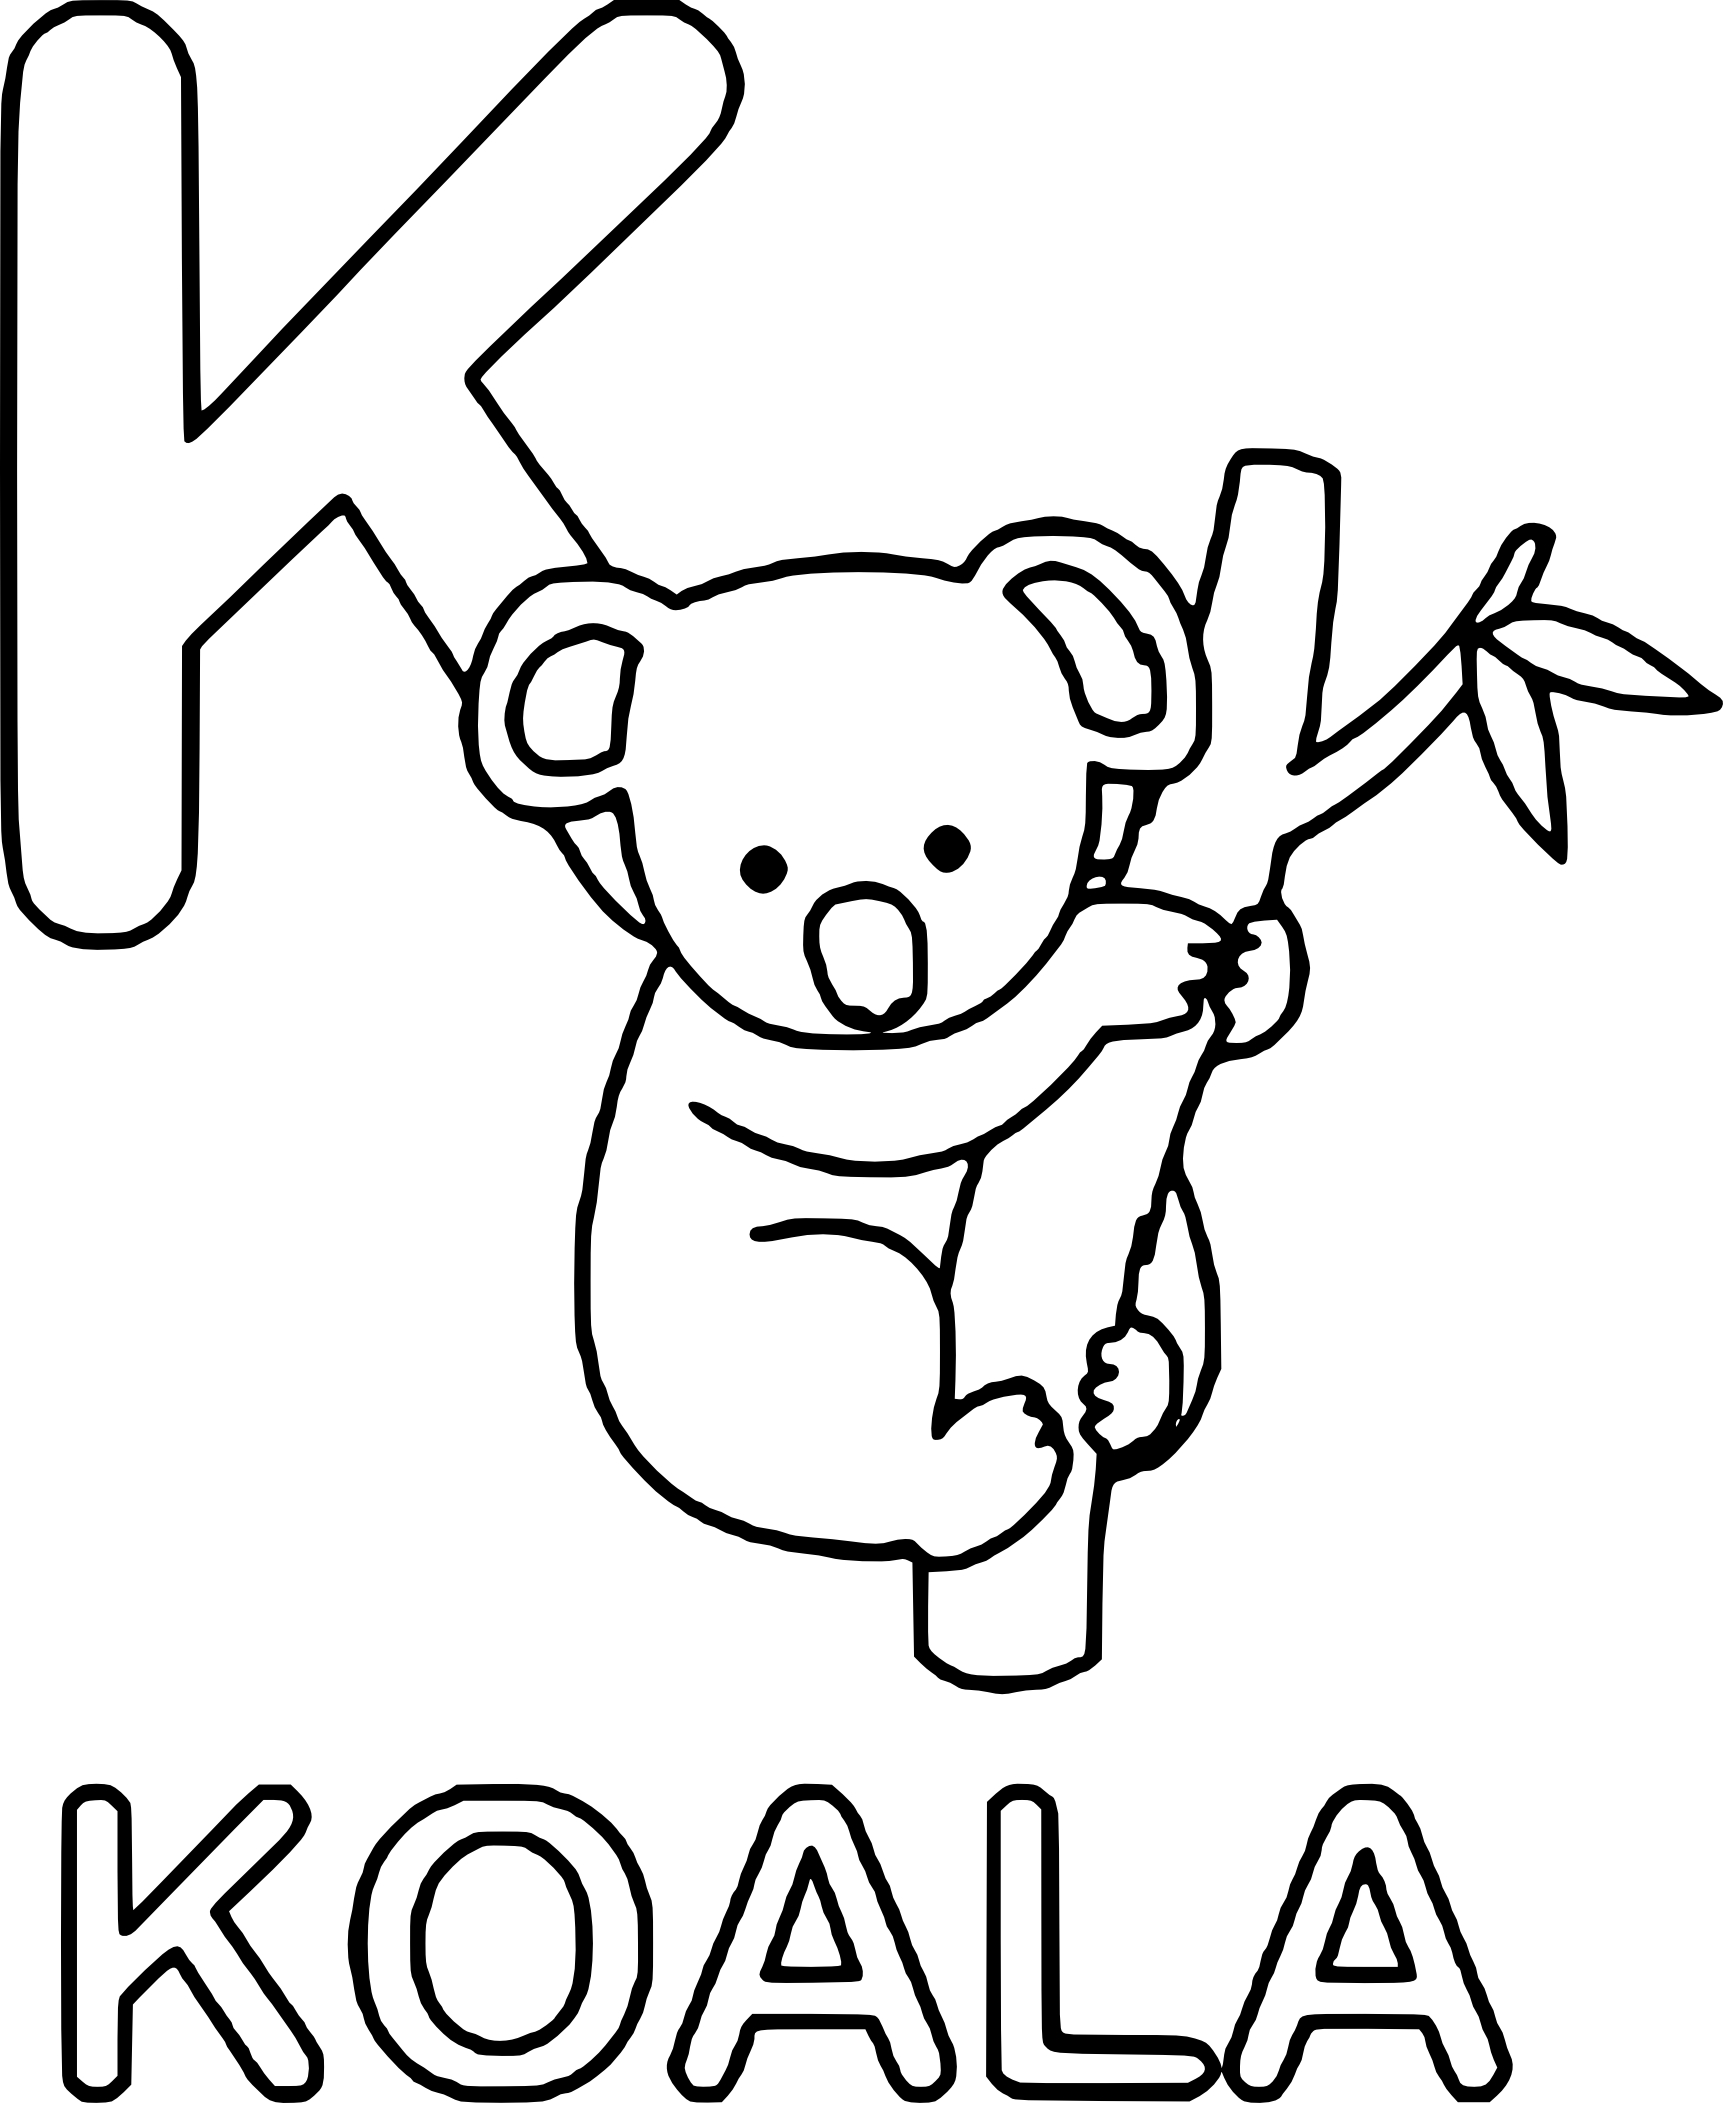 Cute Koala Coloring Pages at GetDrawings | Free download